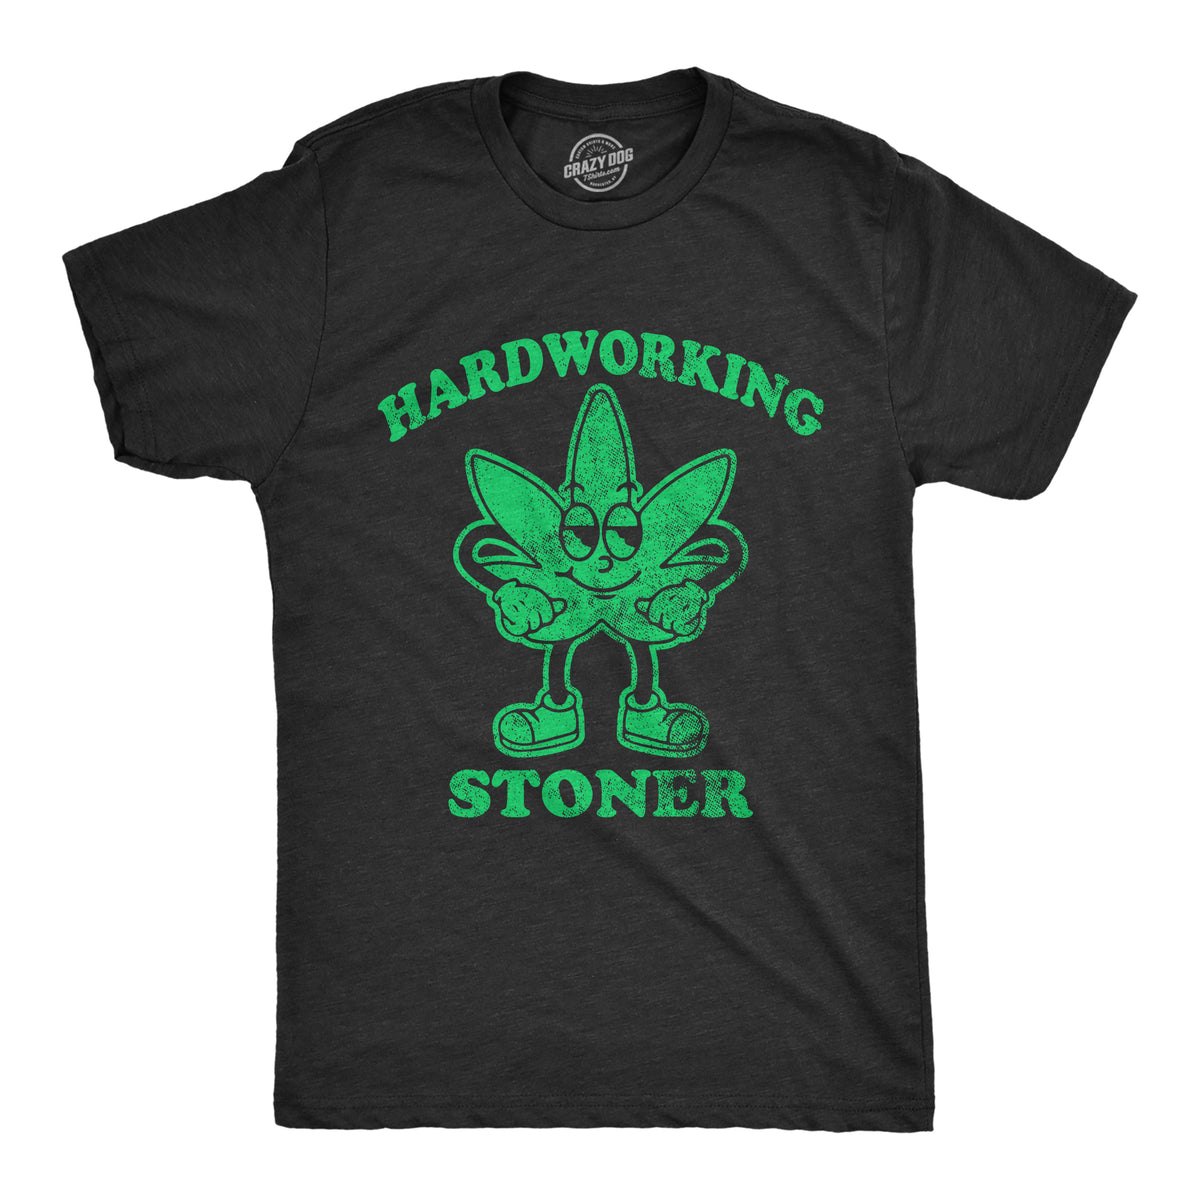 Funny Heather Black - STONER Hardworking Stoner Mens T Shirt Nerdy 420 sarcastic Tee